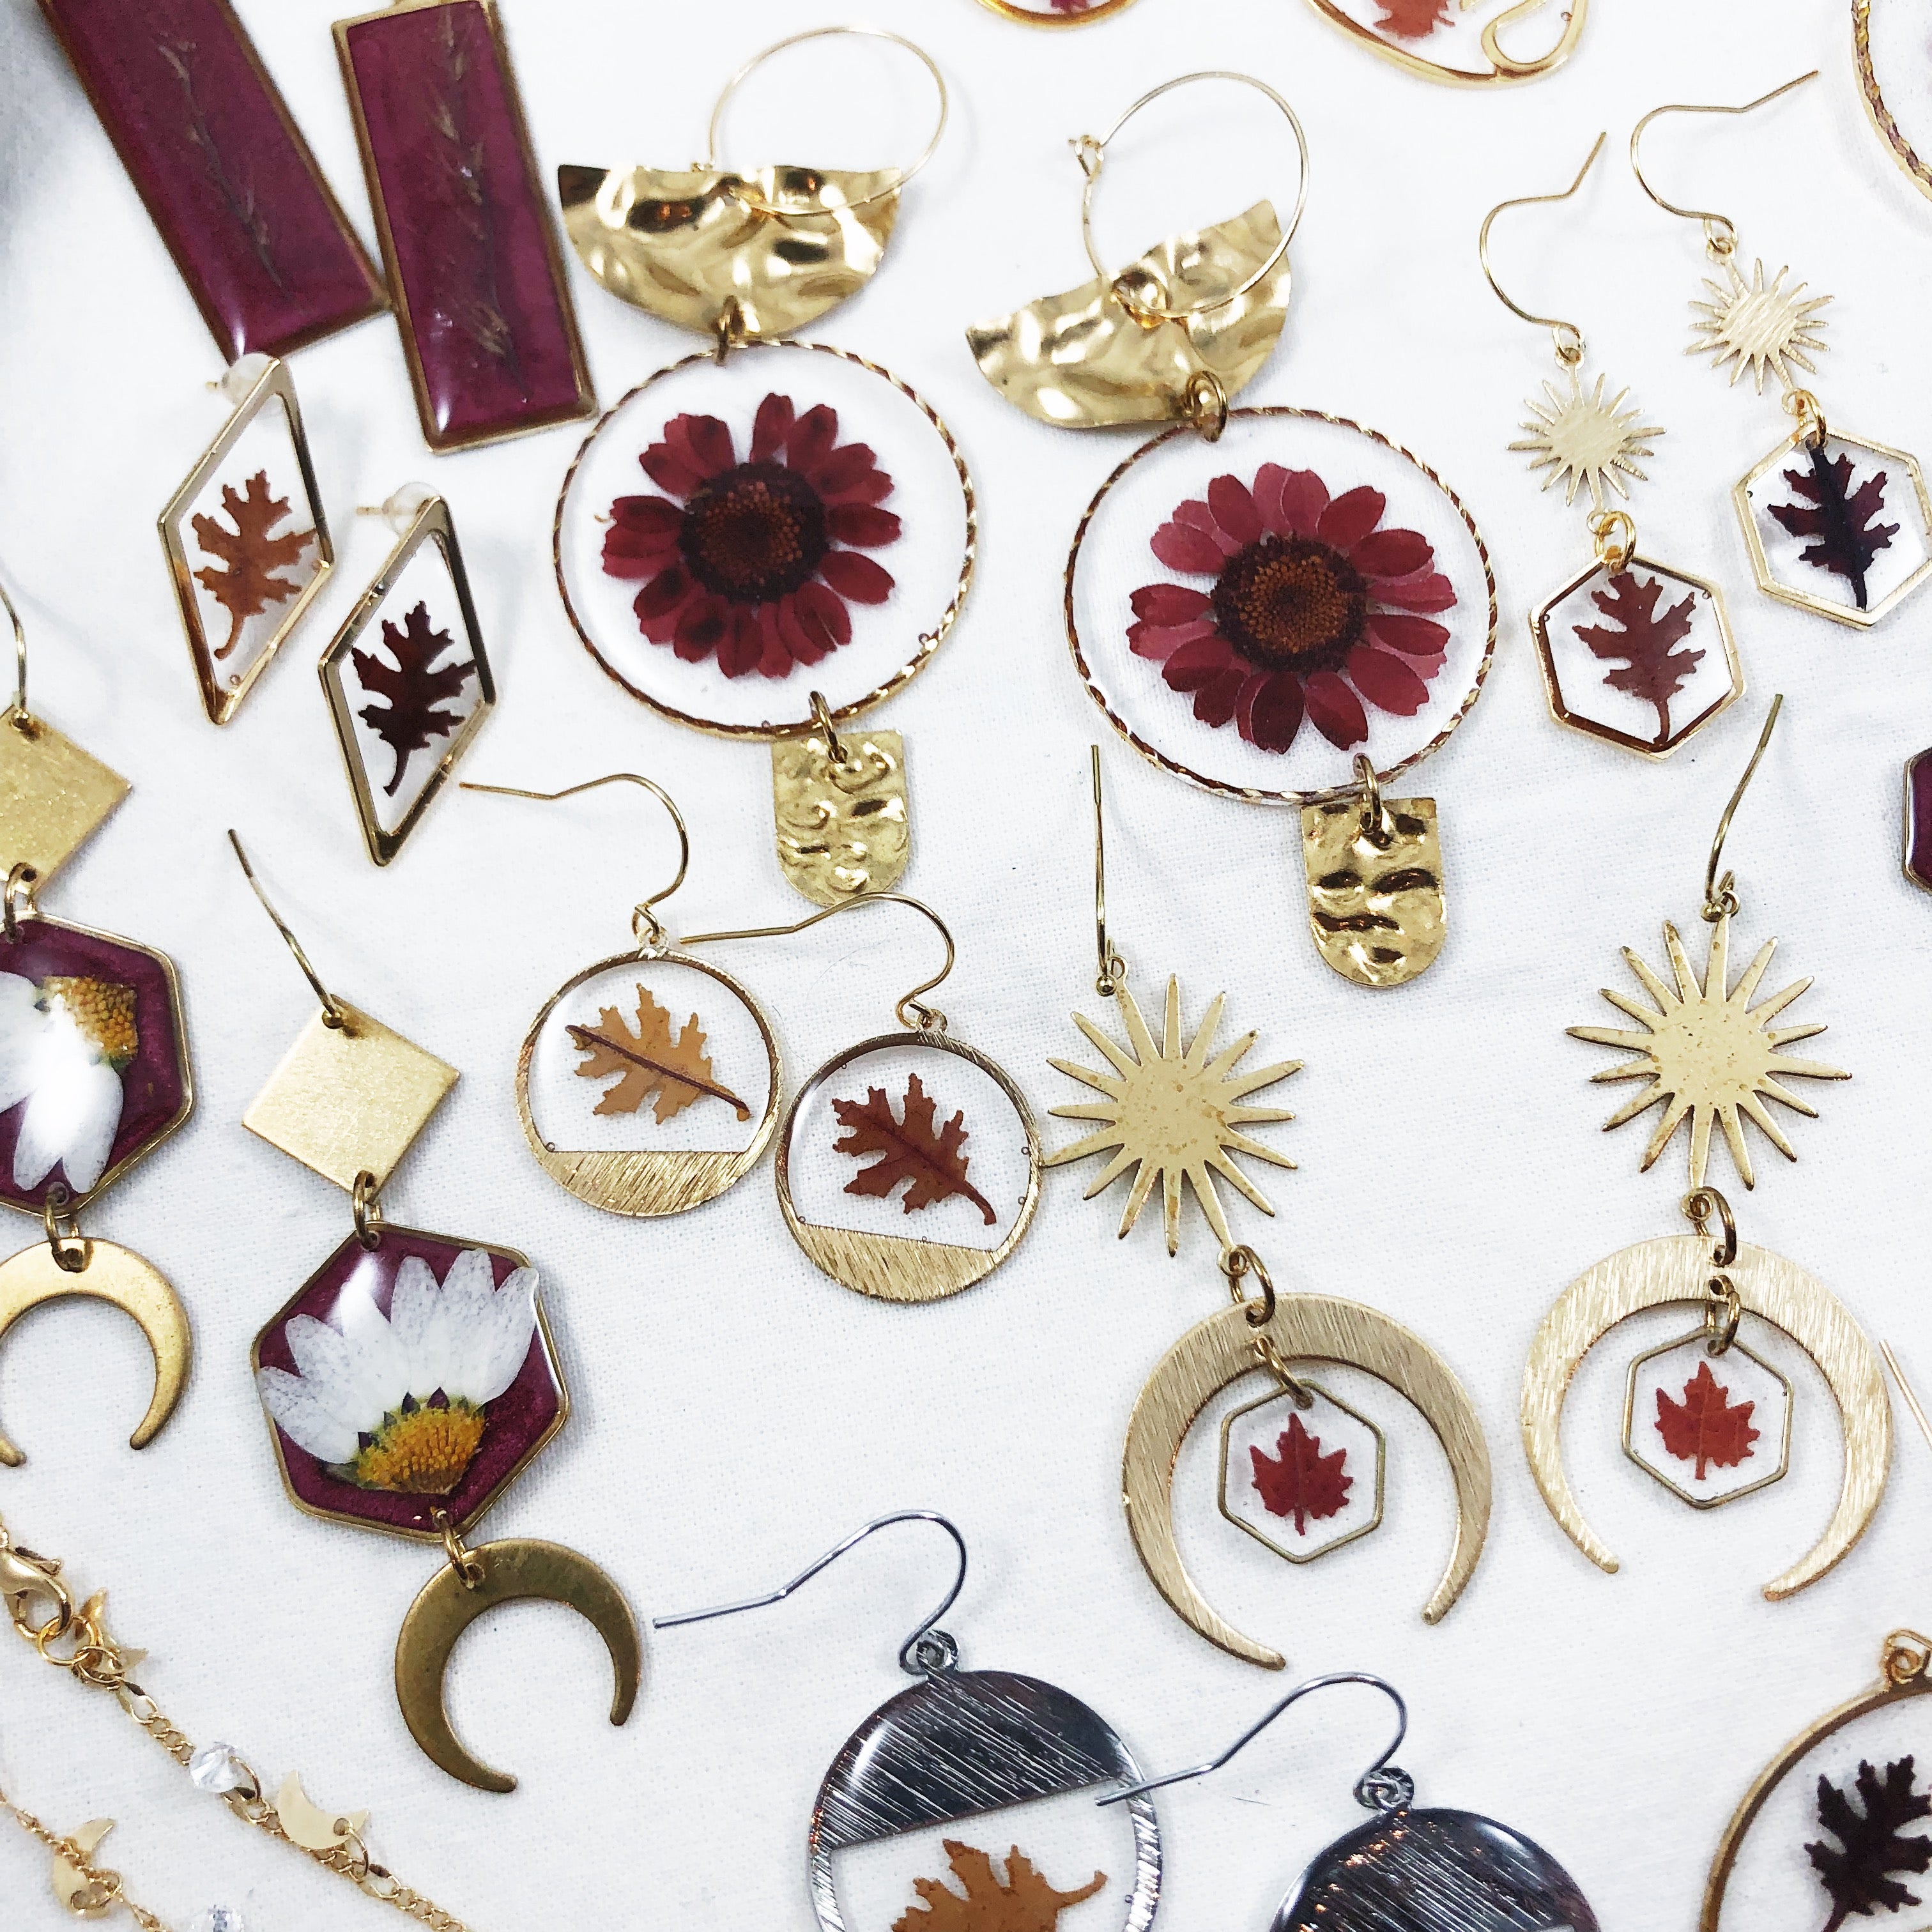 Fall Collection - Brass Sun & Moon Maple Leaf Earrings